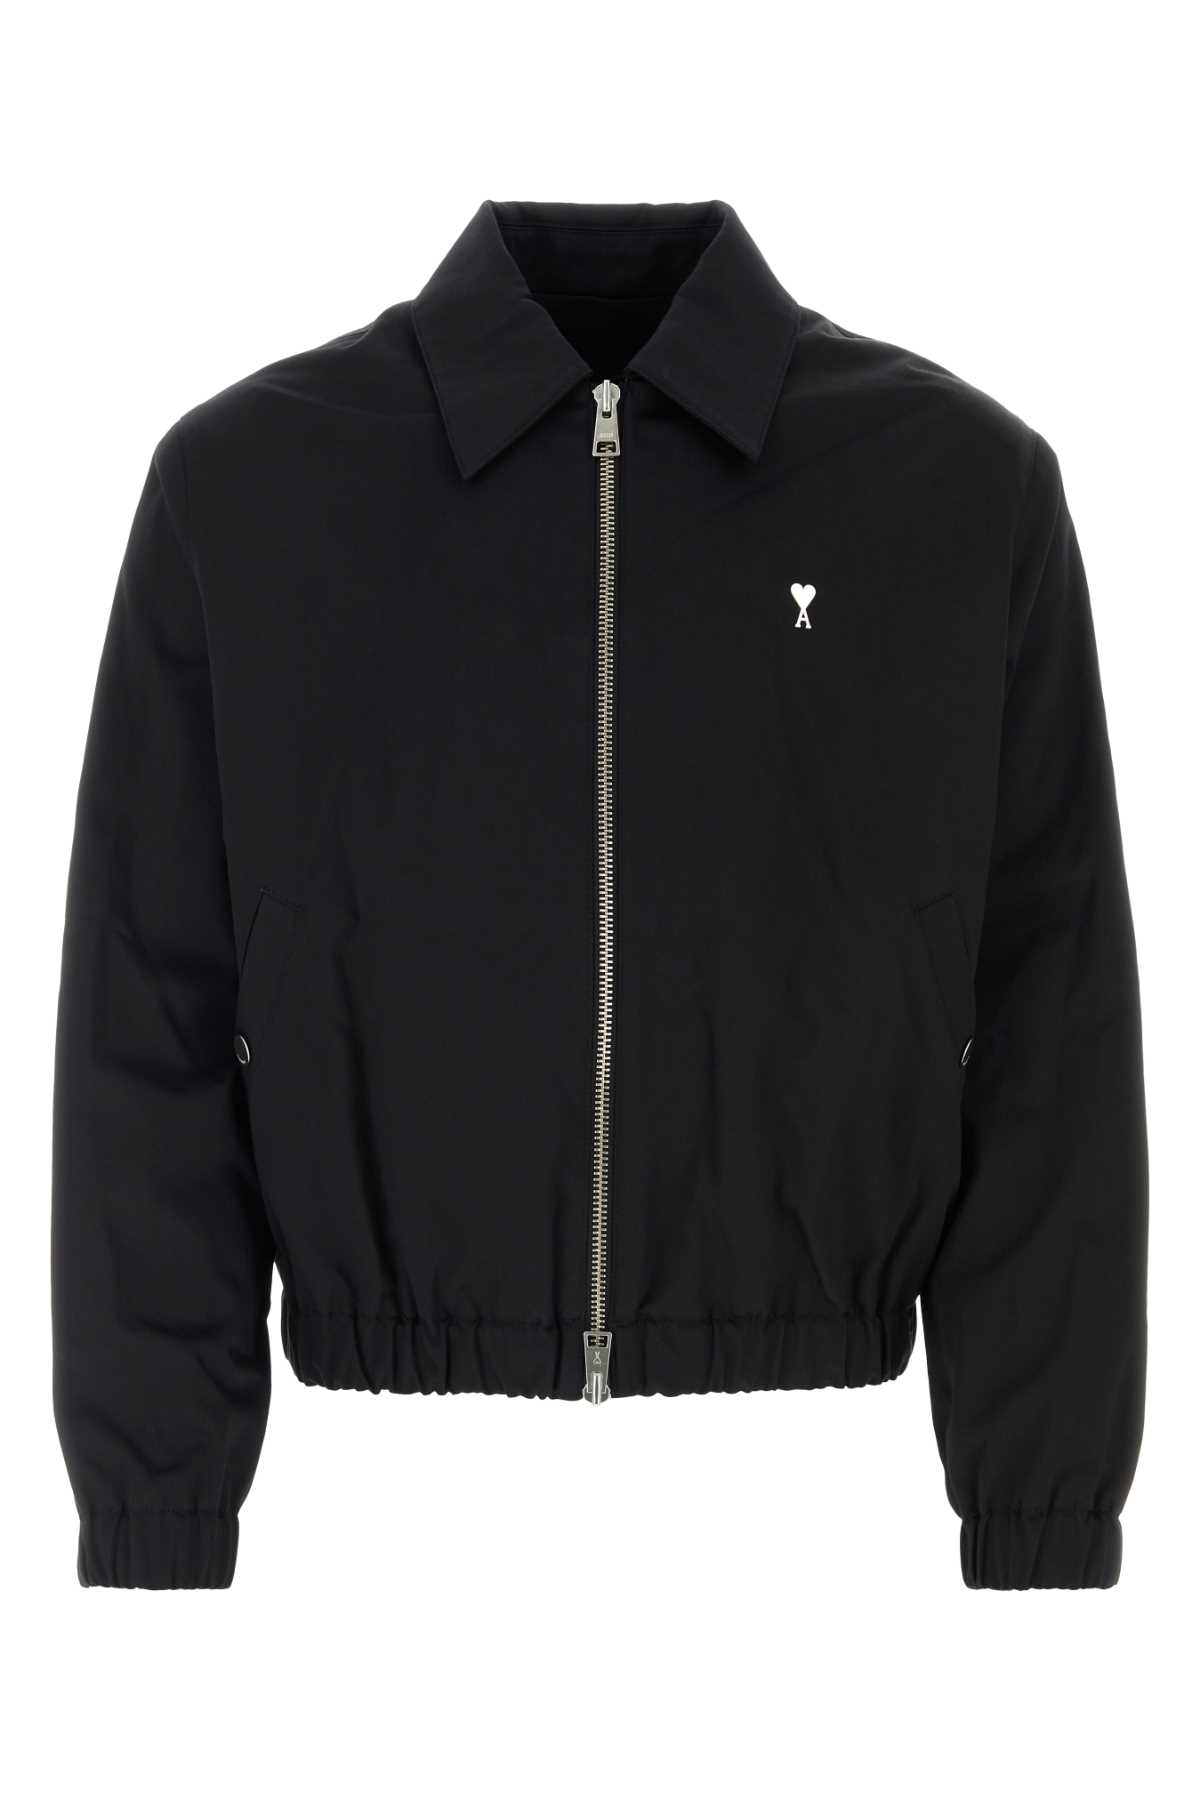 Shop Ami Alexandre Mattiussi Black Cotton Bomber Jacket